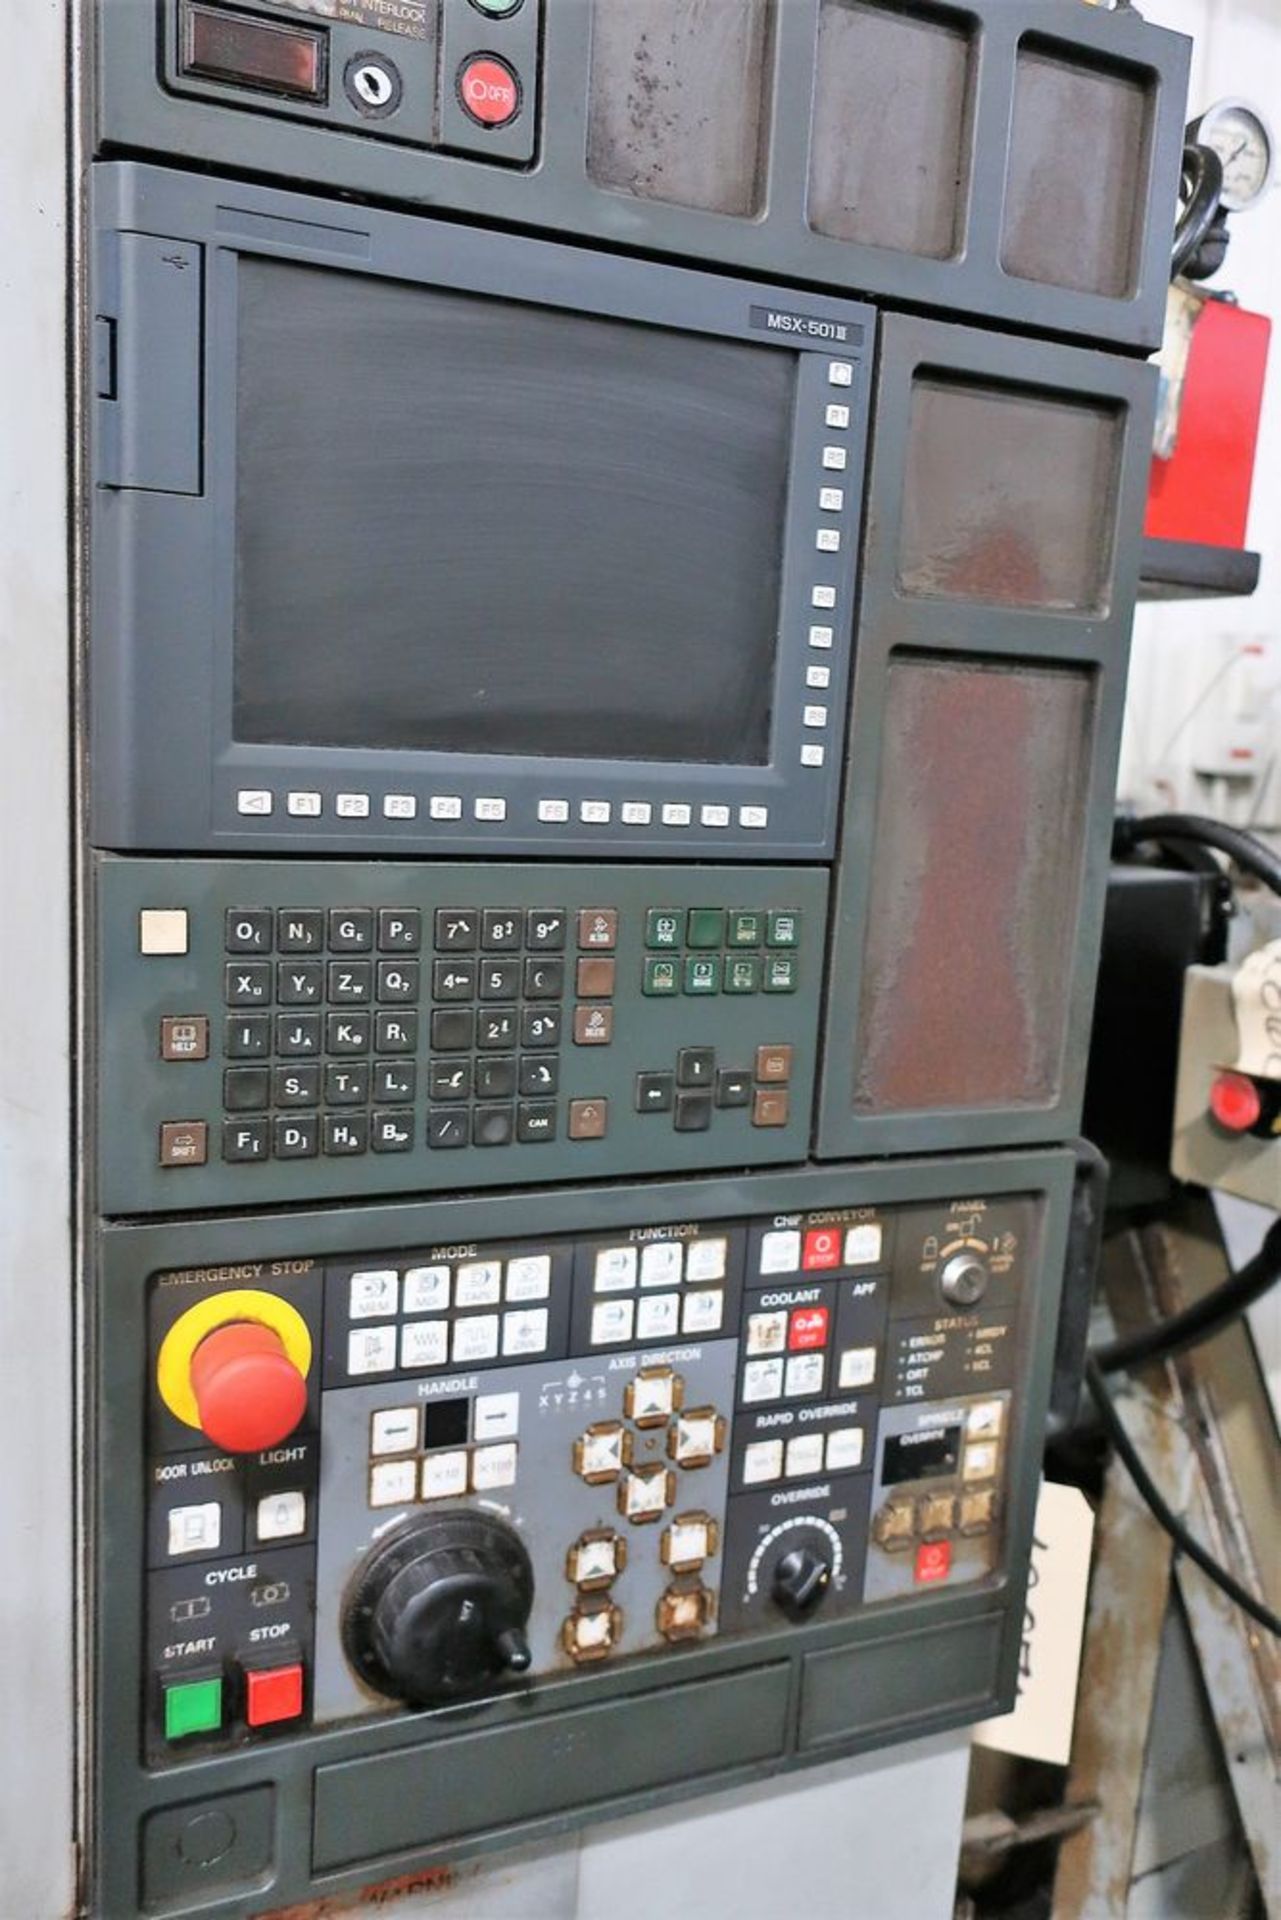 MORI SEIKI NV5000A/40 4-AXIS CNC VERTICAL MACHINING CENTER, S/N NV501CC0971, NEW 2003 - Image 3 of 8